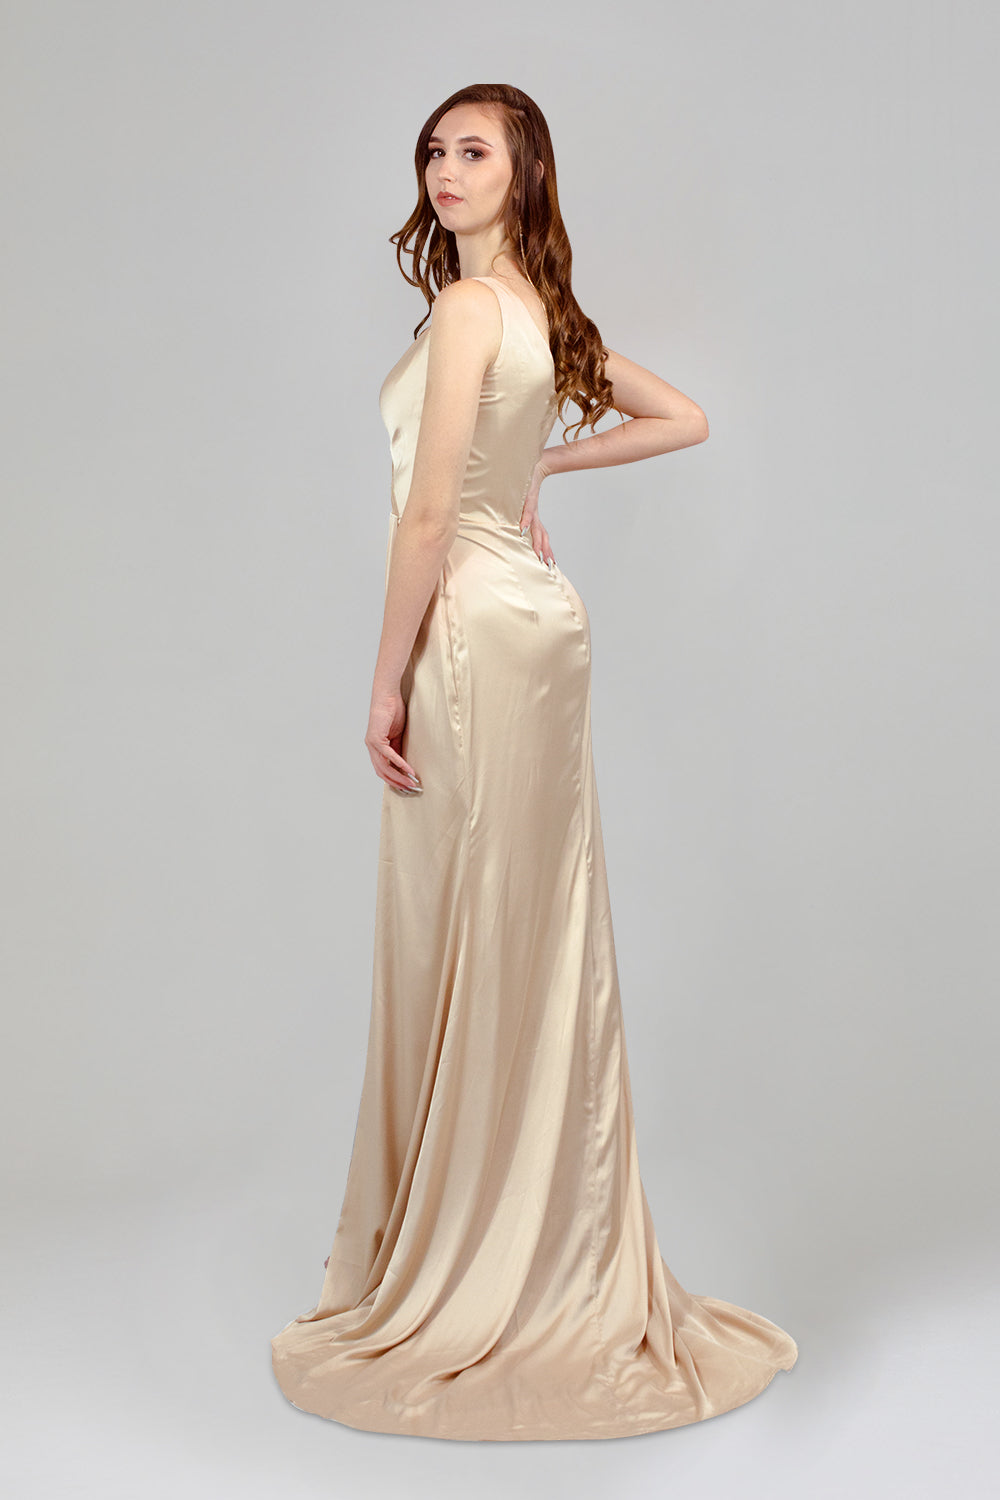 champagne gold bridesmaid dresses australia online enviou sbridal & formal